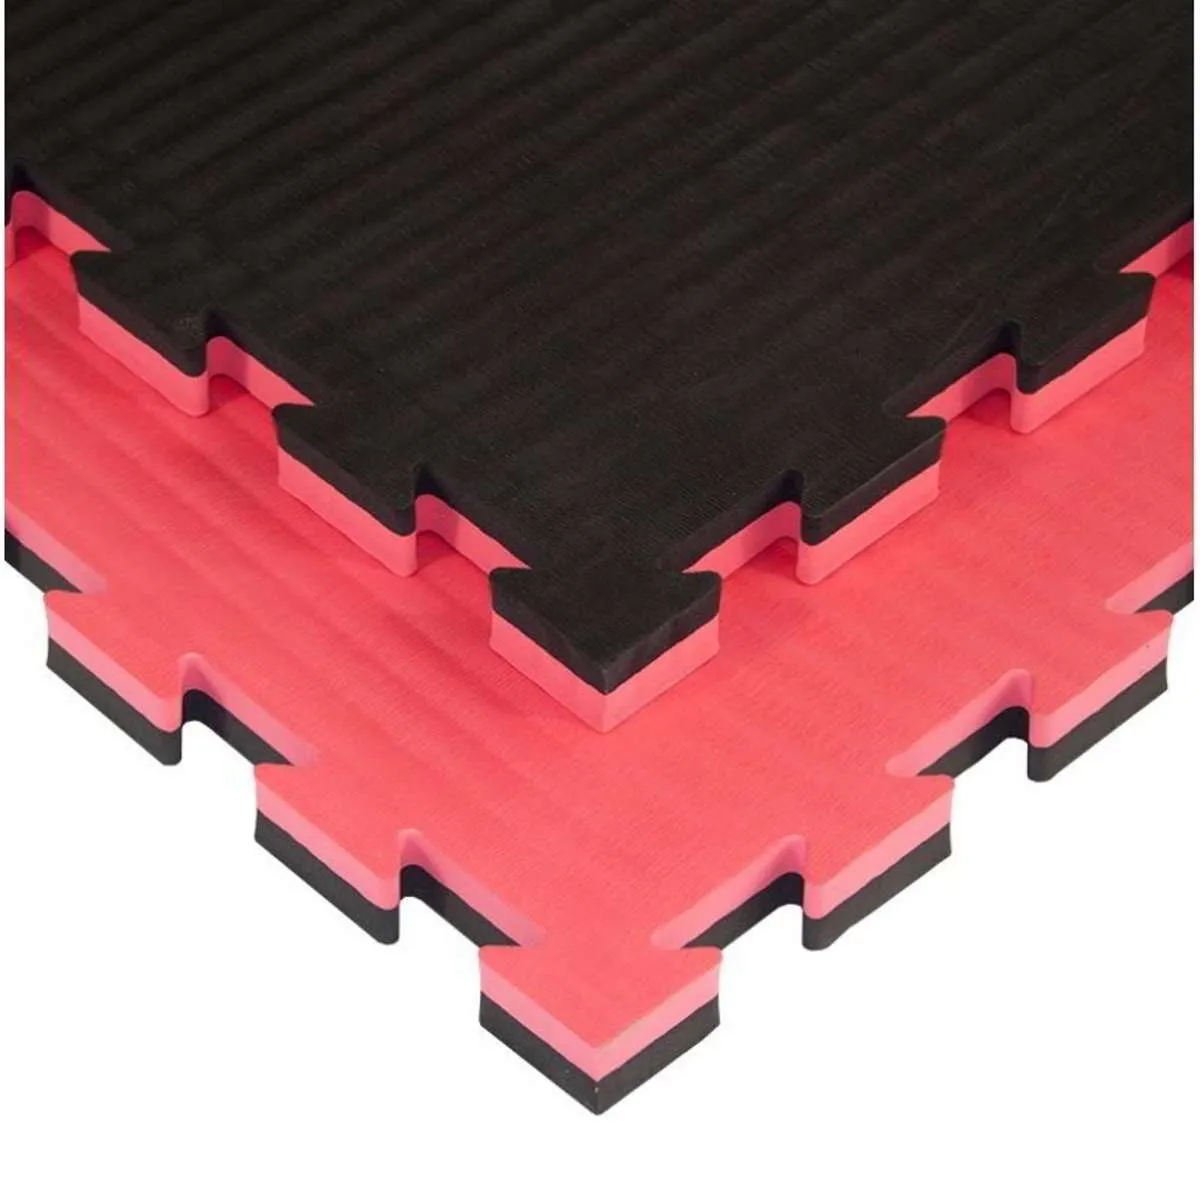 Tatami mat JJ30J red/black 100 cm x 100 cm x 3 cm